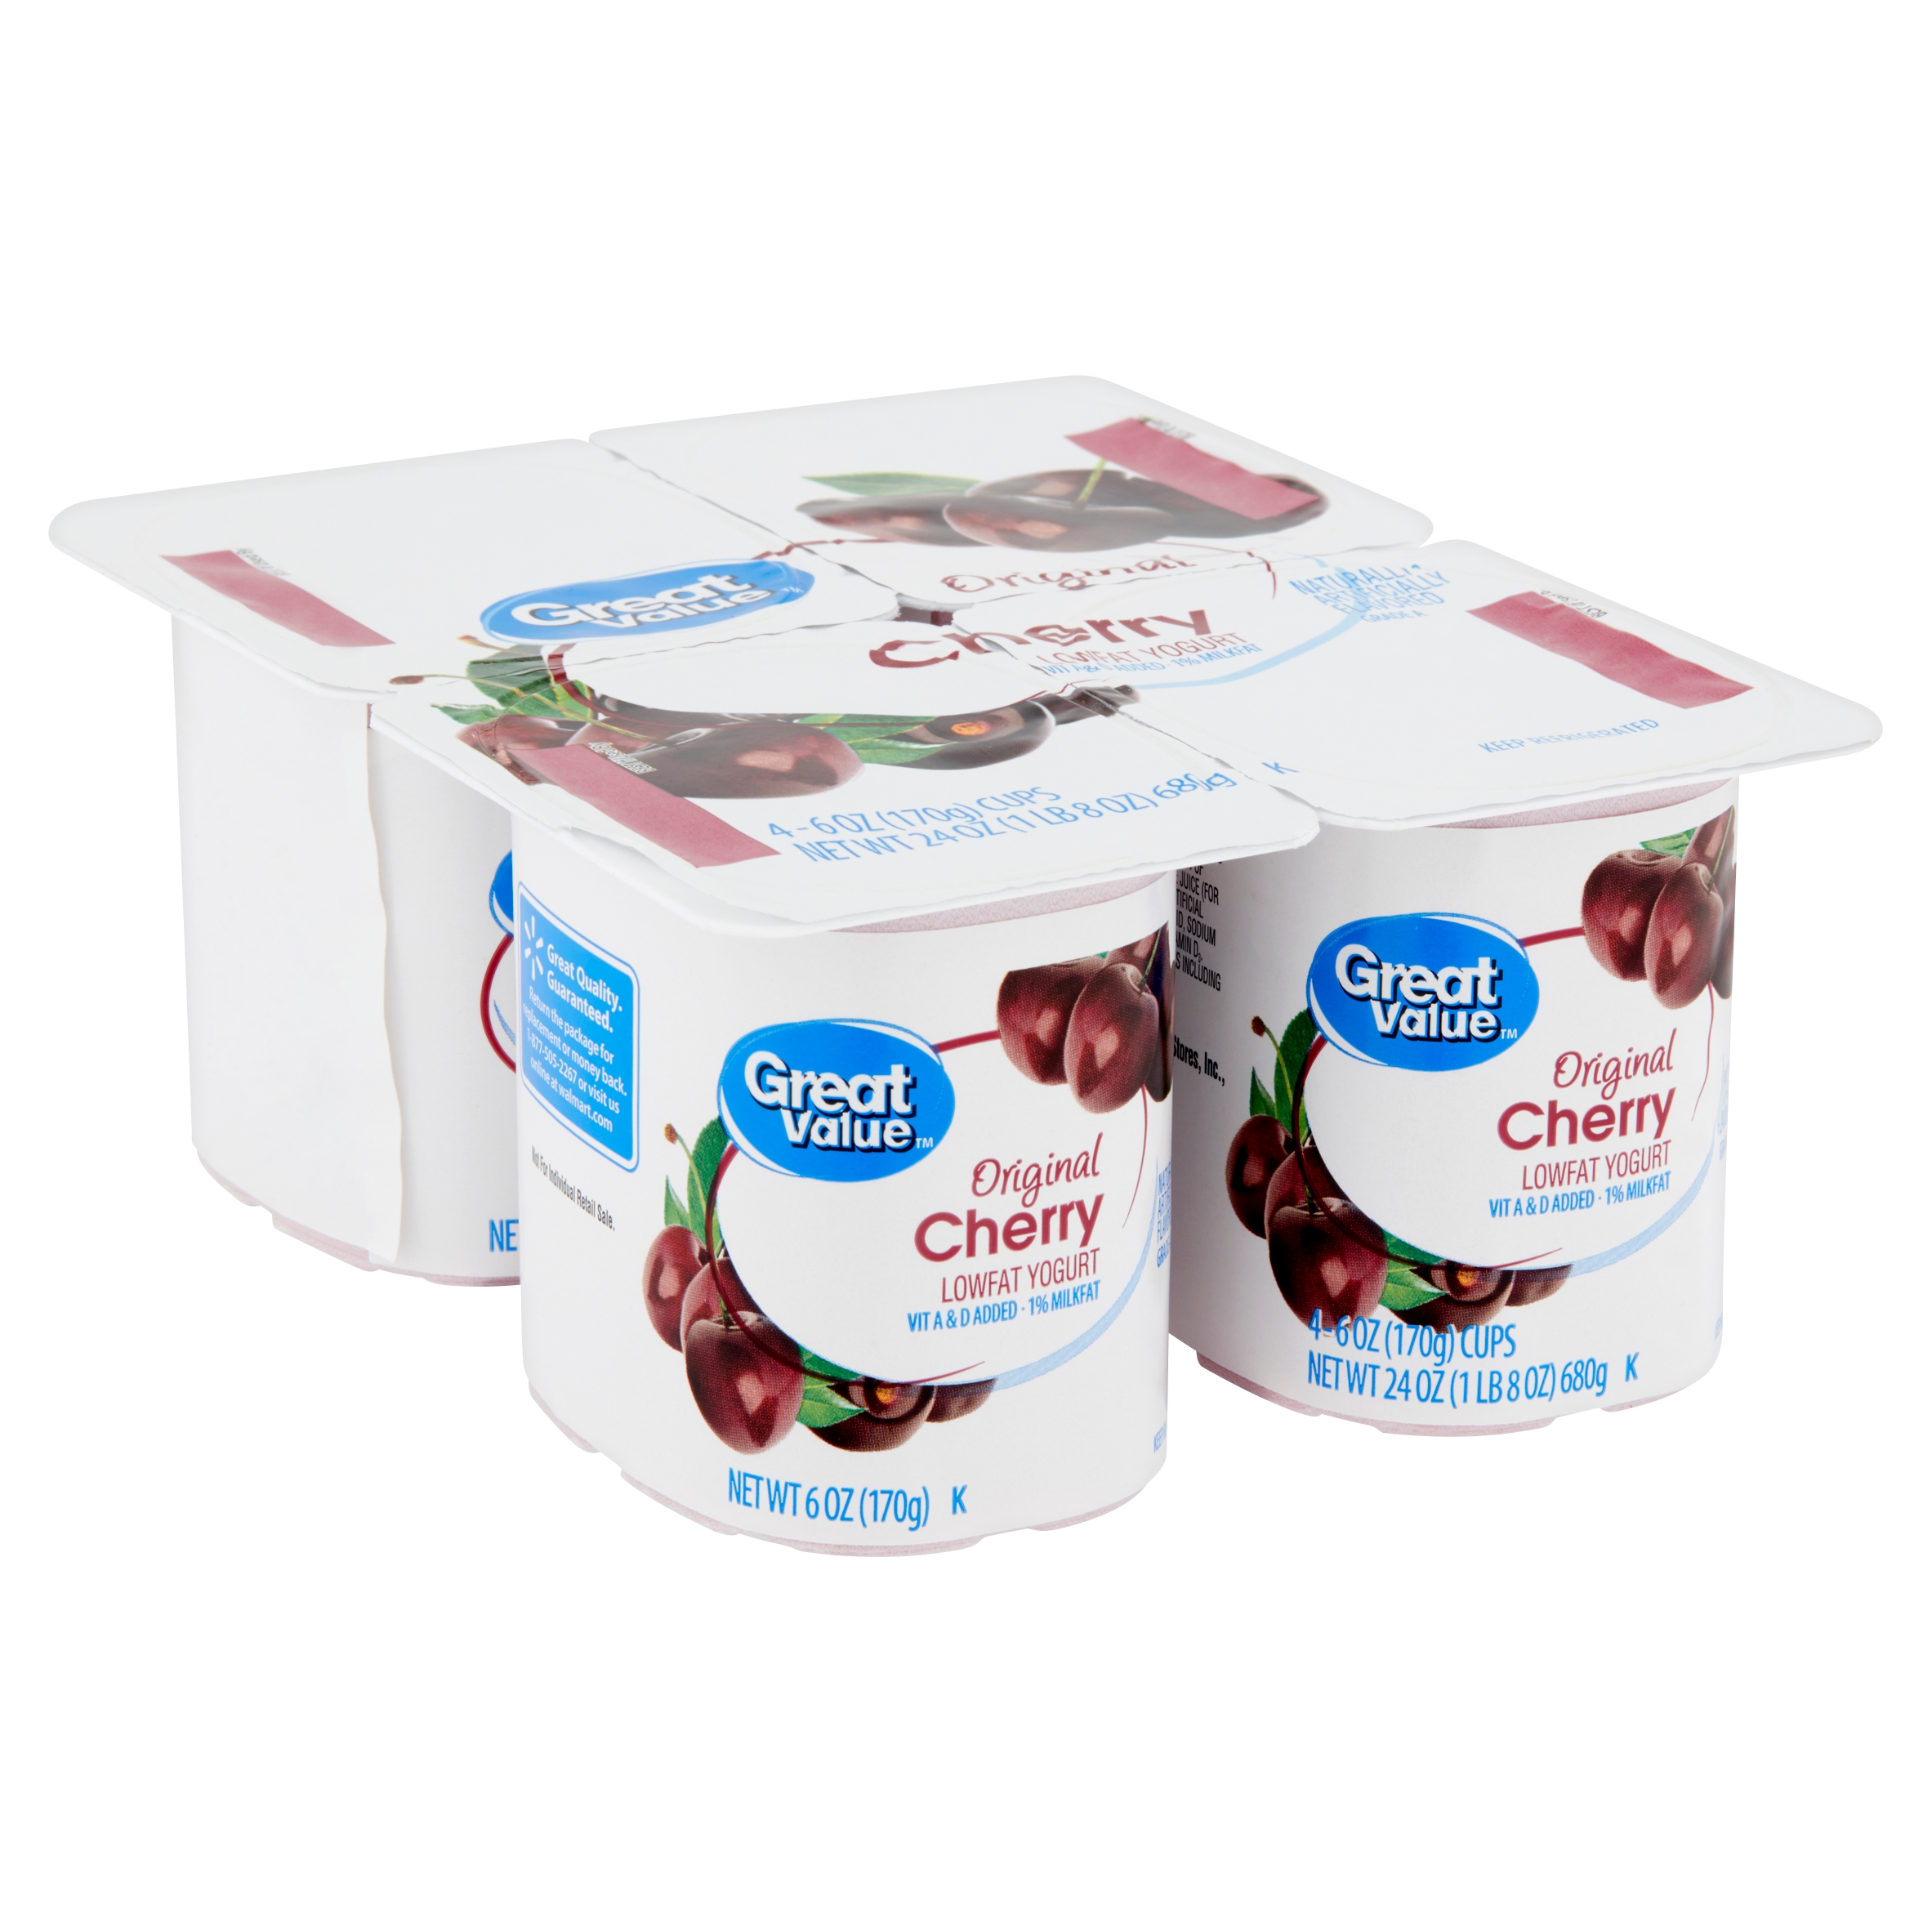 Great Value Original Cherry Lowfat Yogurt, 6 Oz, 4 Count Image